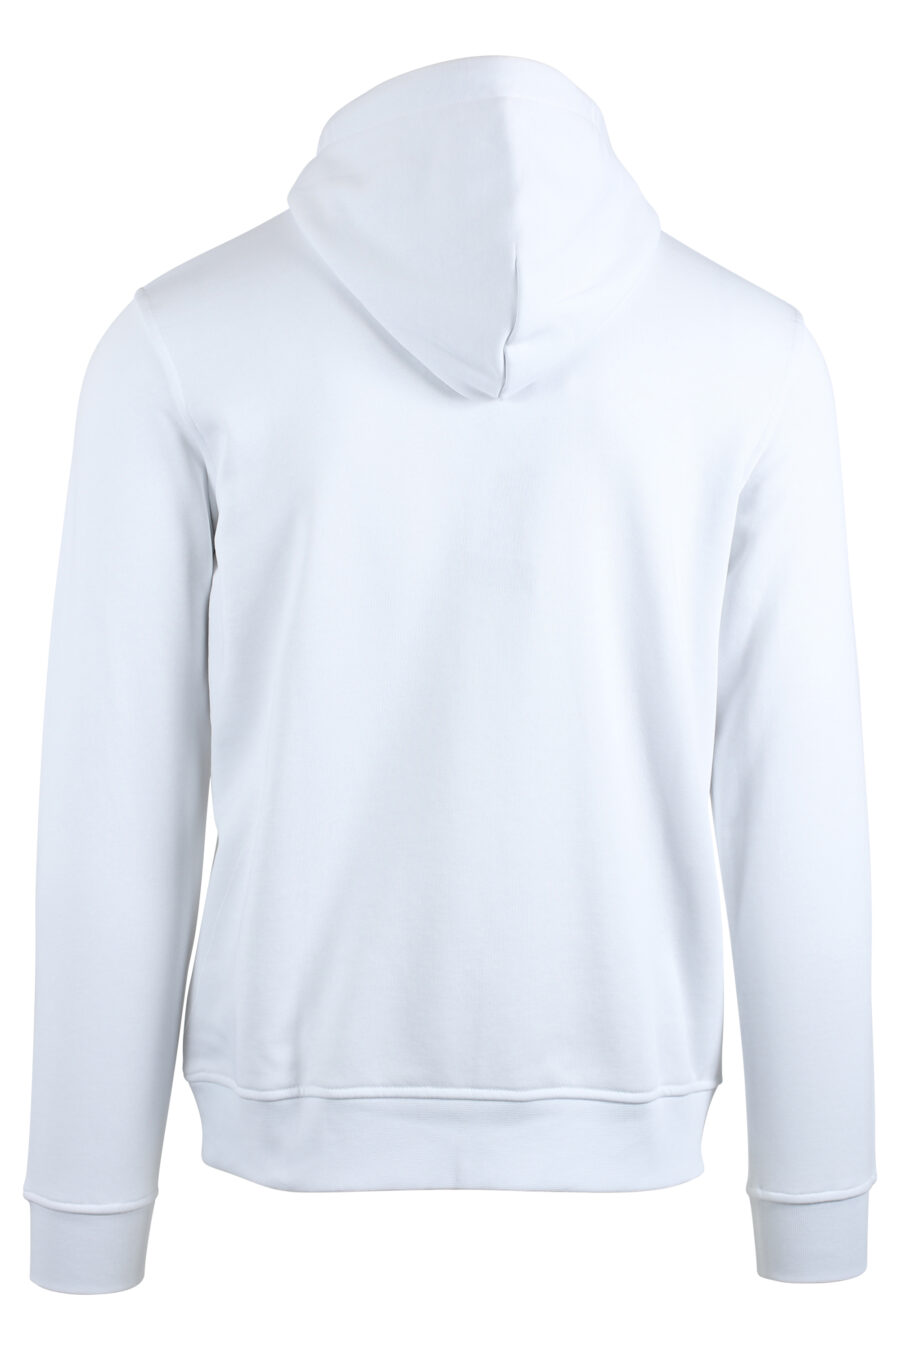 Sweat à capuche blanc avec logo blanc - IMG 4774